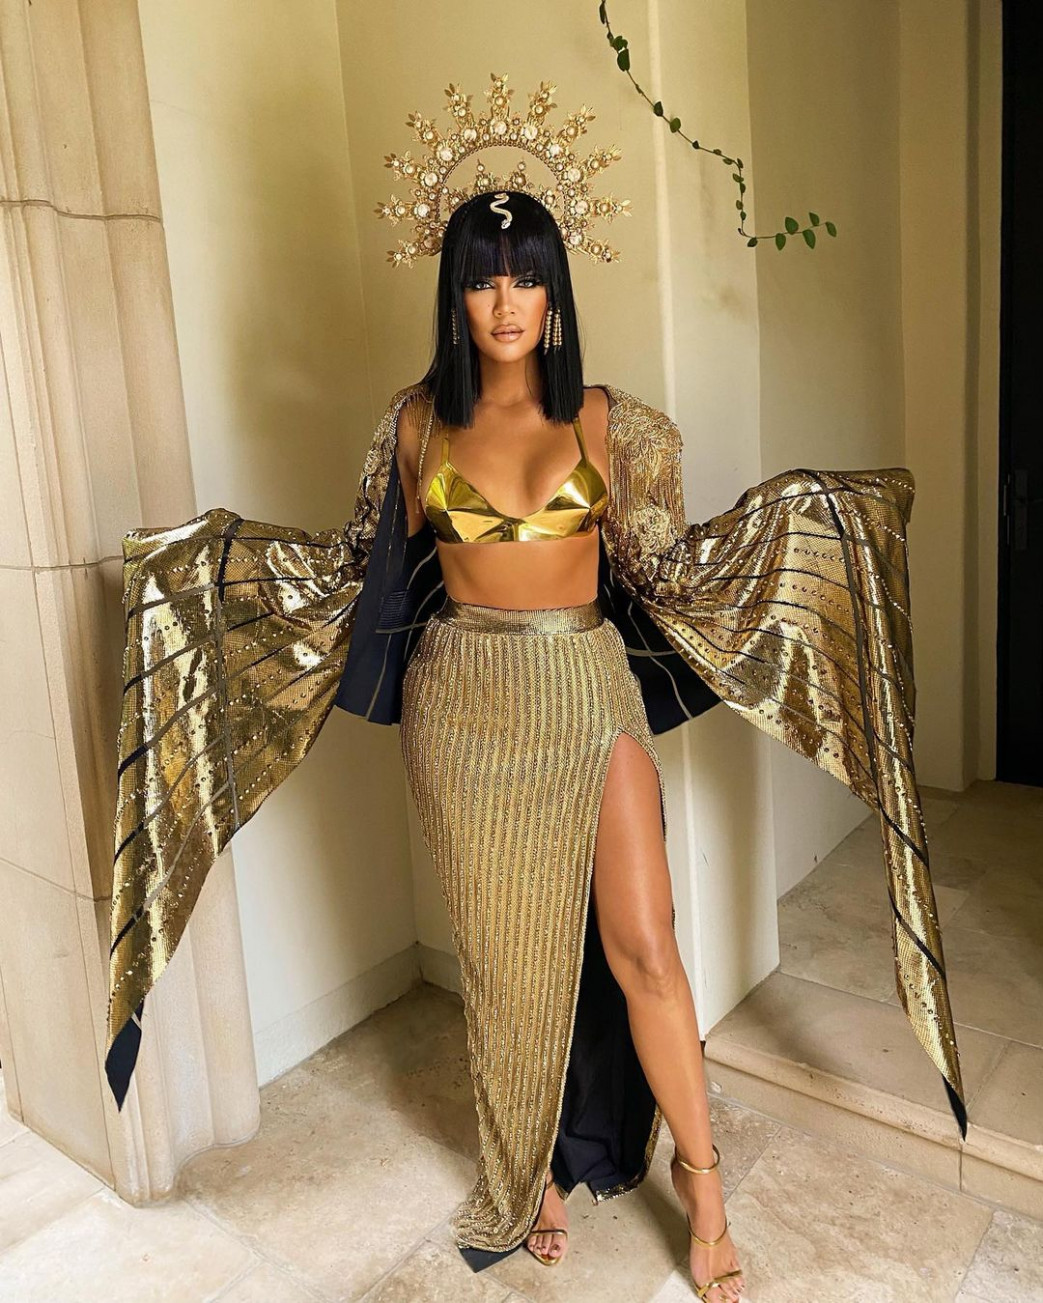 Khloe-Kardashian-Hot-In-Cleopatra-Halloween-Costume-1.jpg